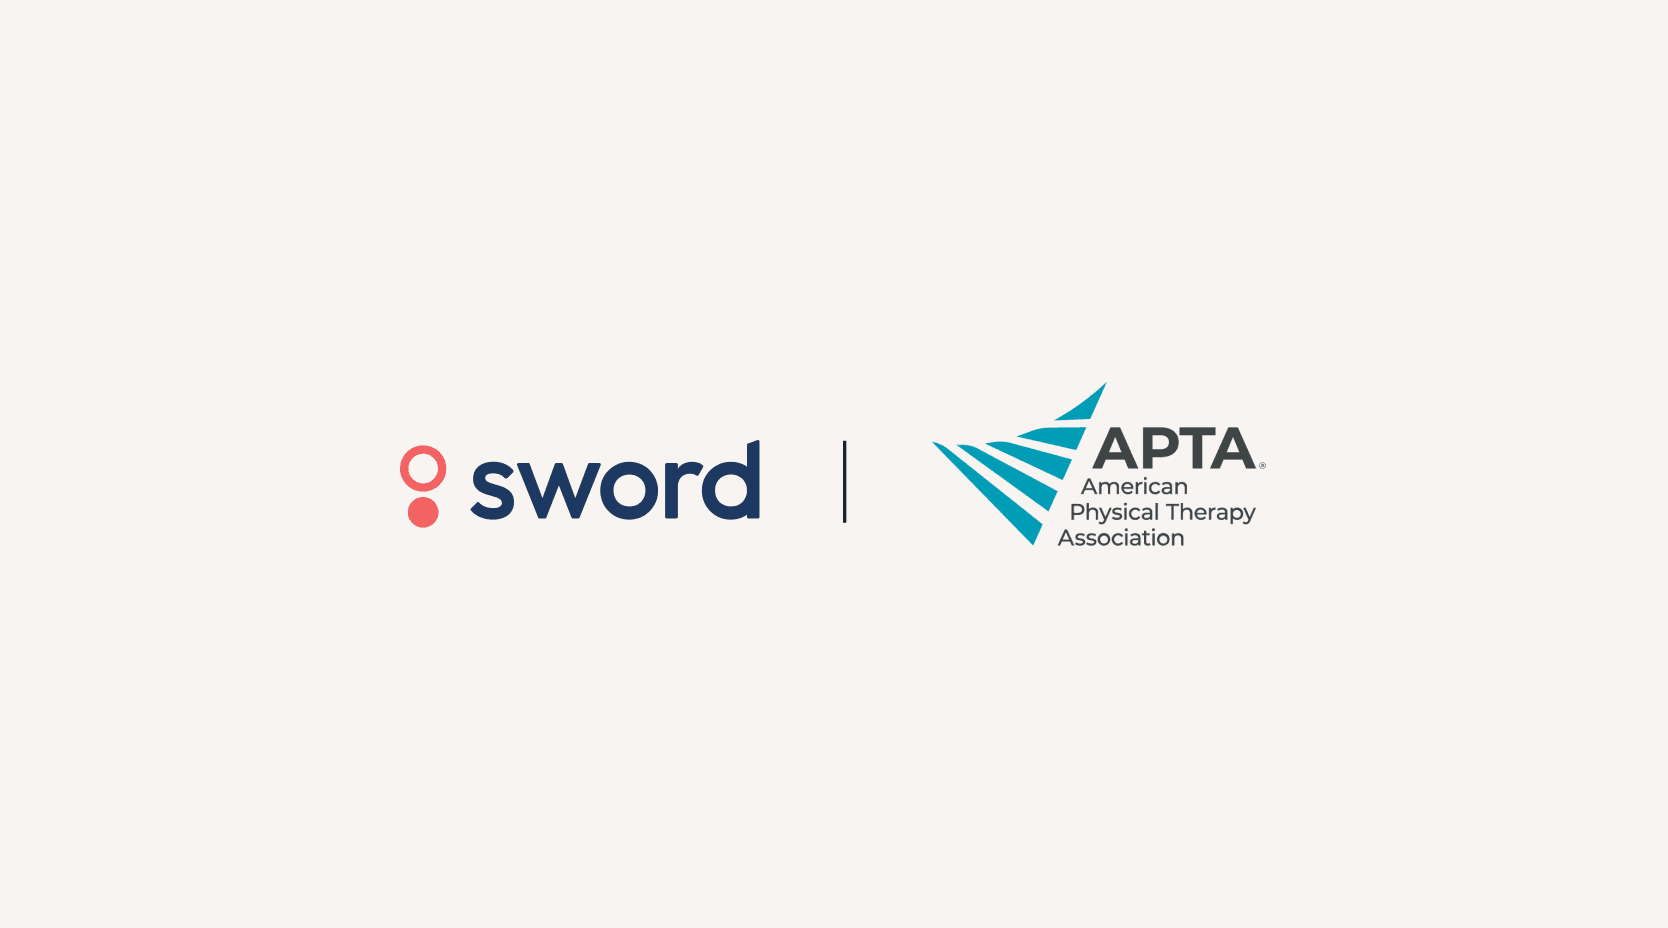 Sword and APTA